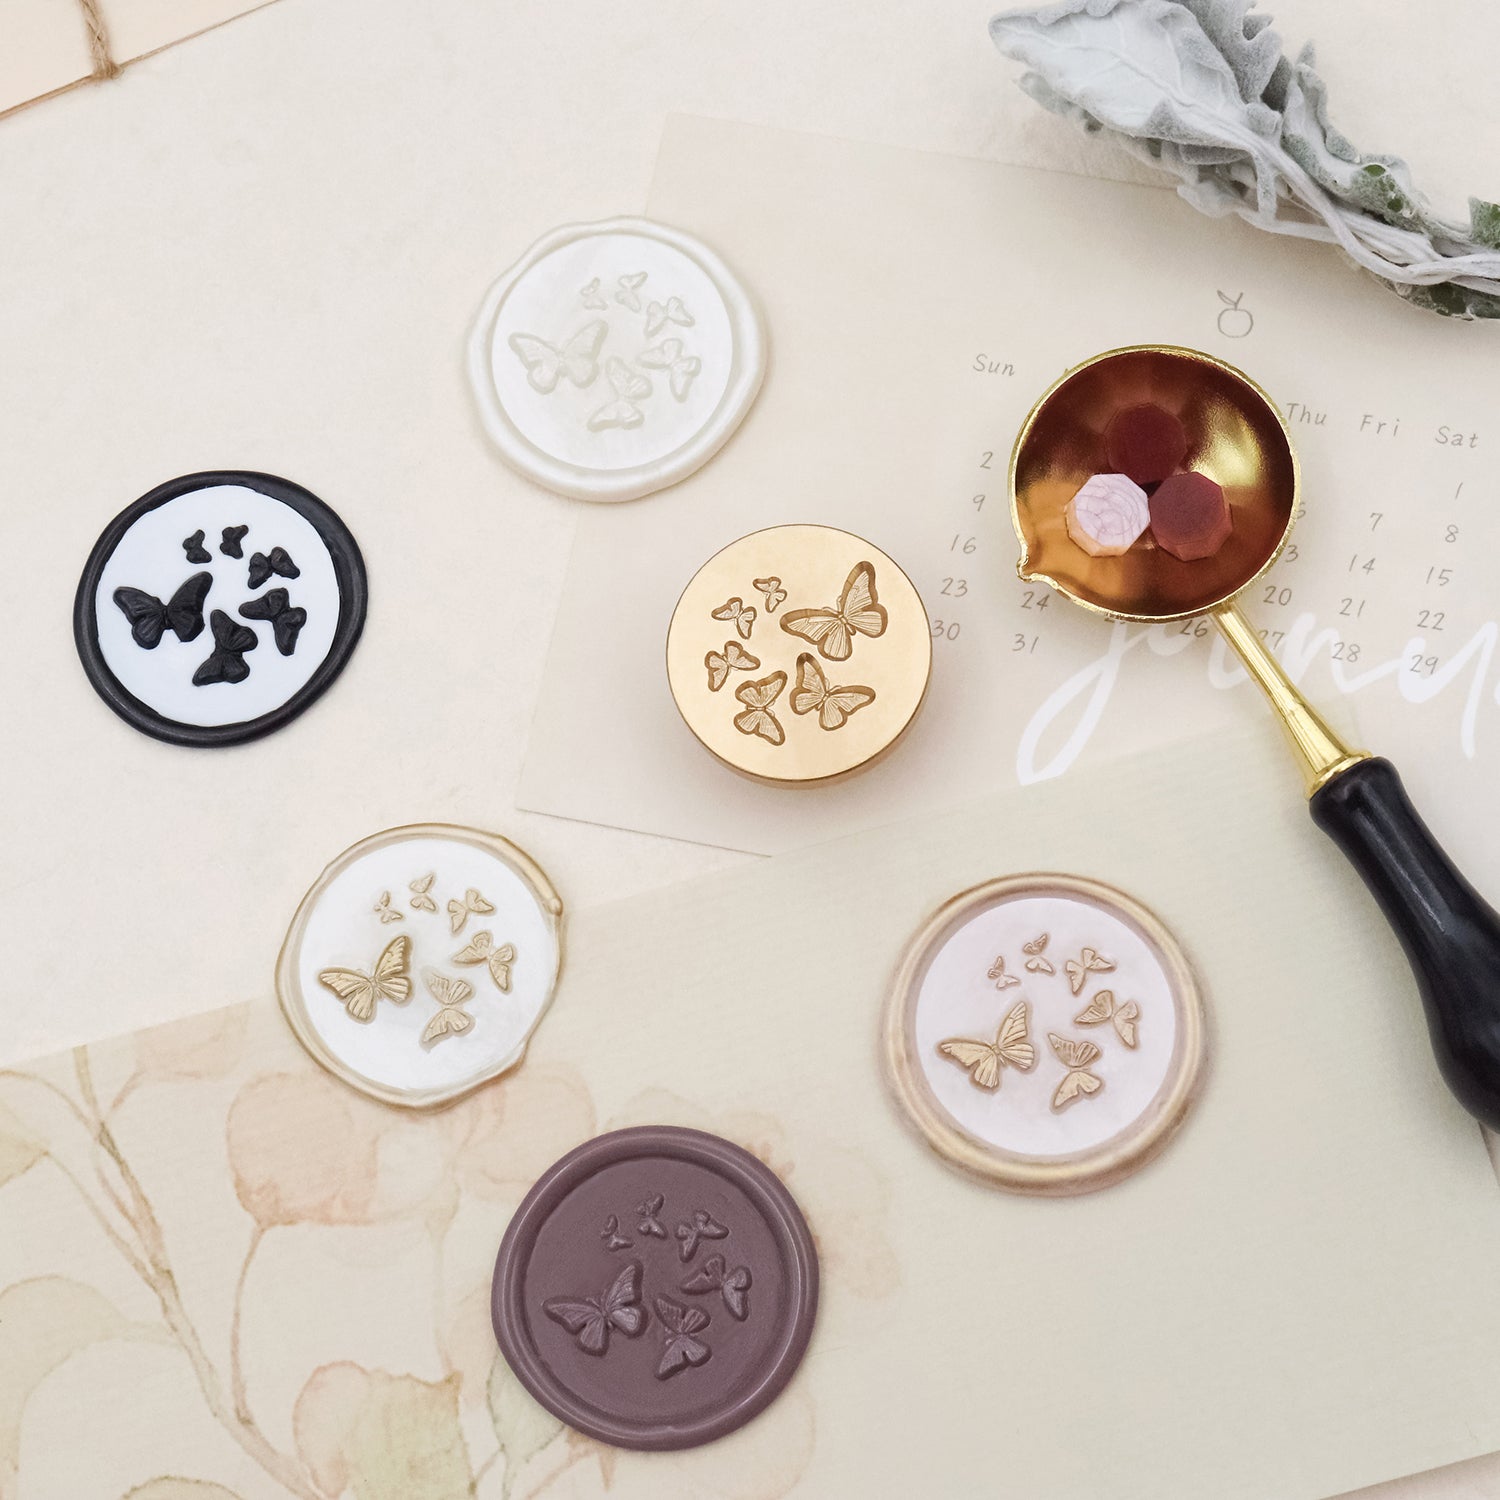 Butterfly Wax Seal Stamp,Custom Wax Seal Kits